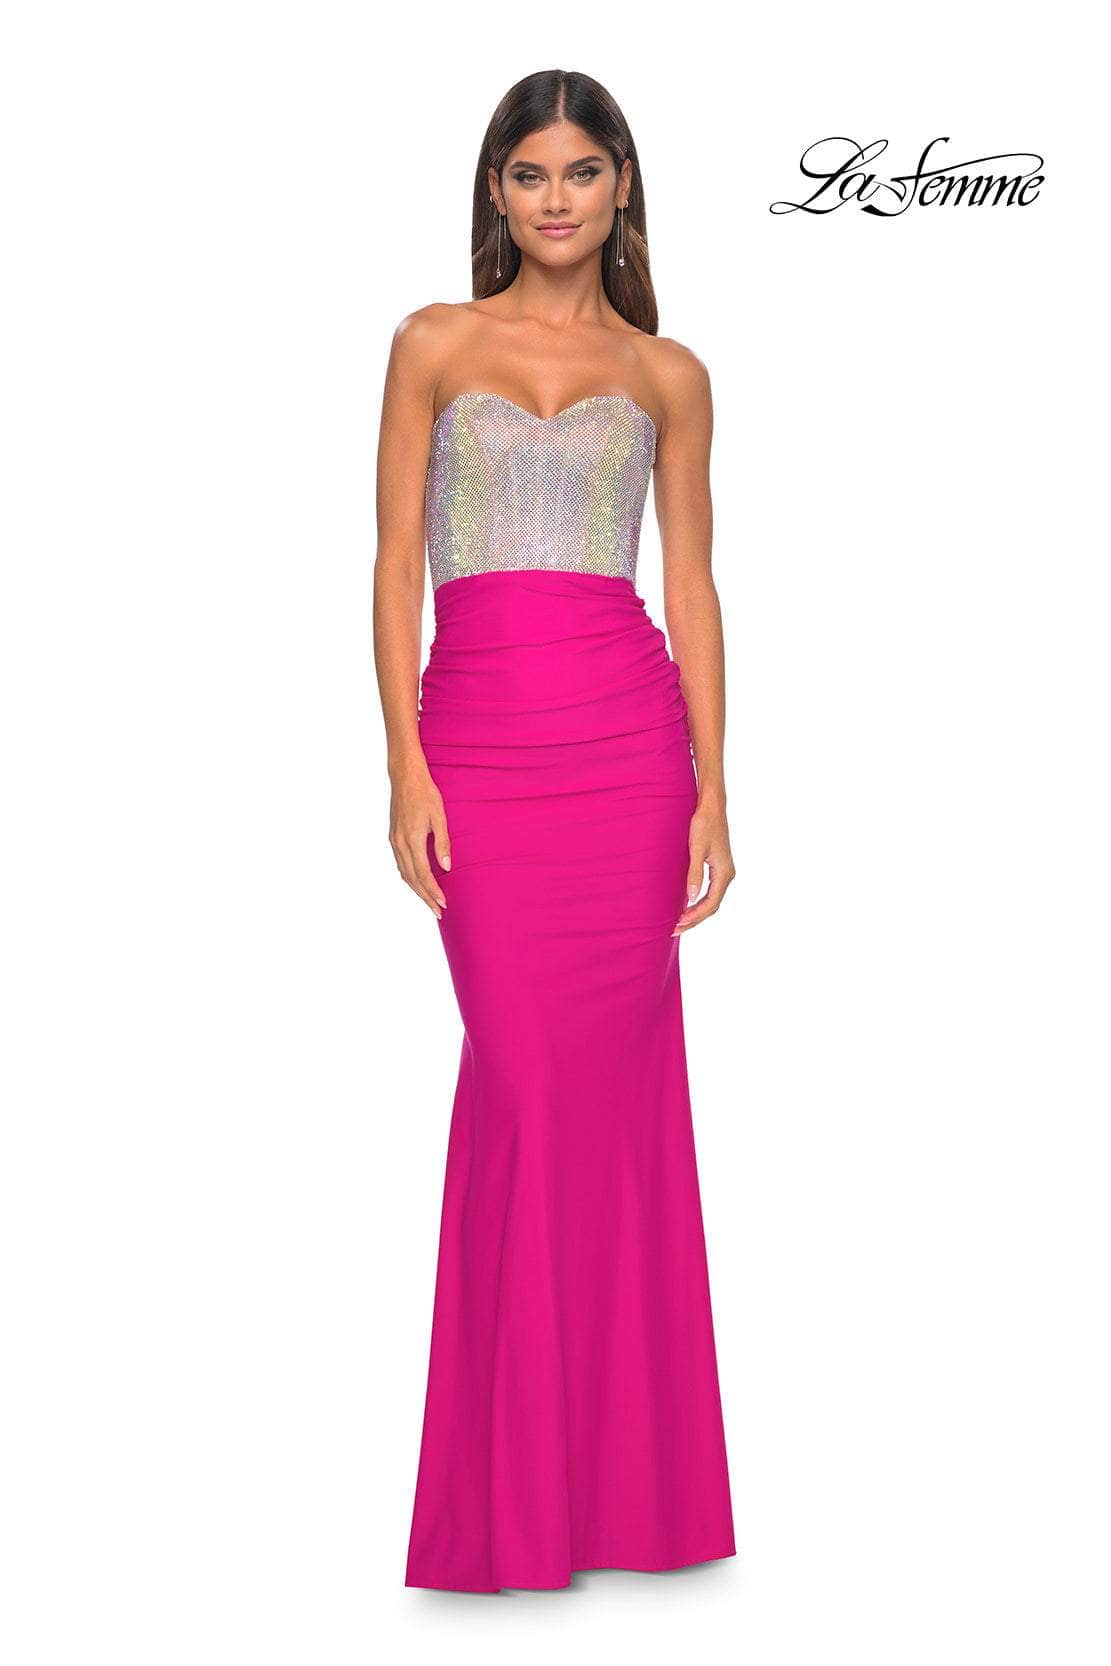 La Femme 32440 - Rhinestone Sweetheart Prom Dress
